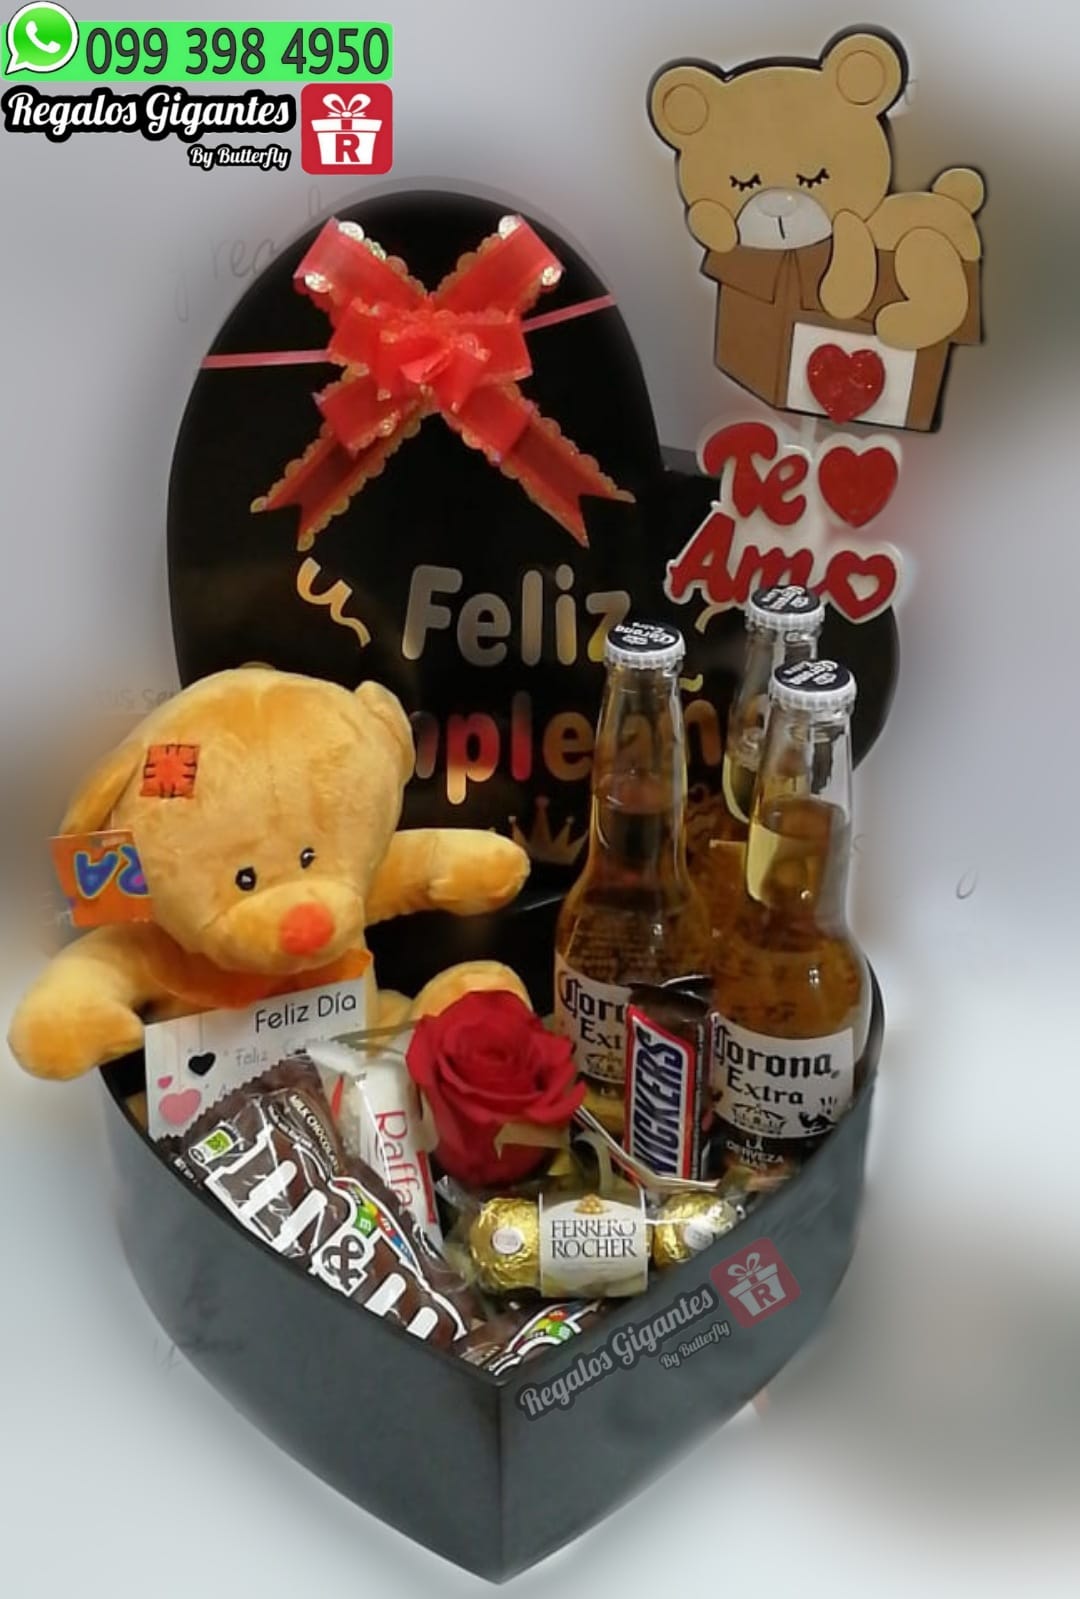 Caja de regalo para hombres / Día de San Valentín para hombres